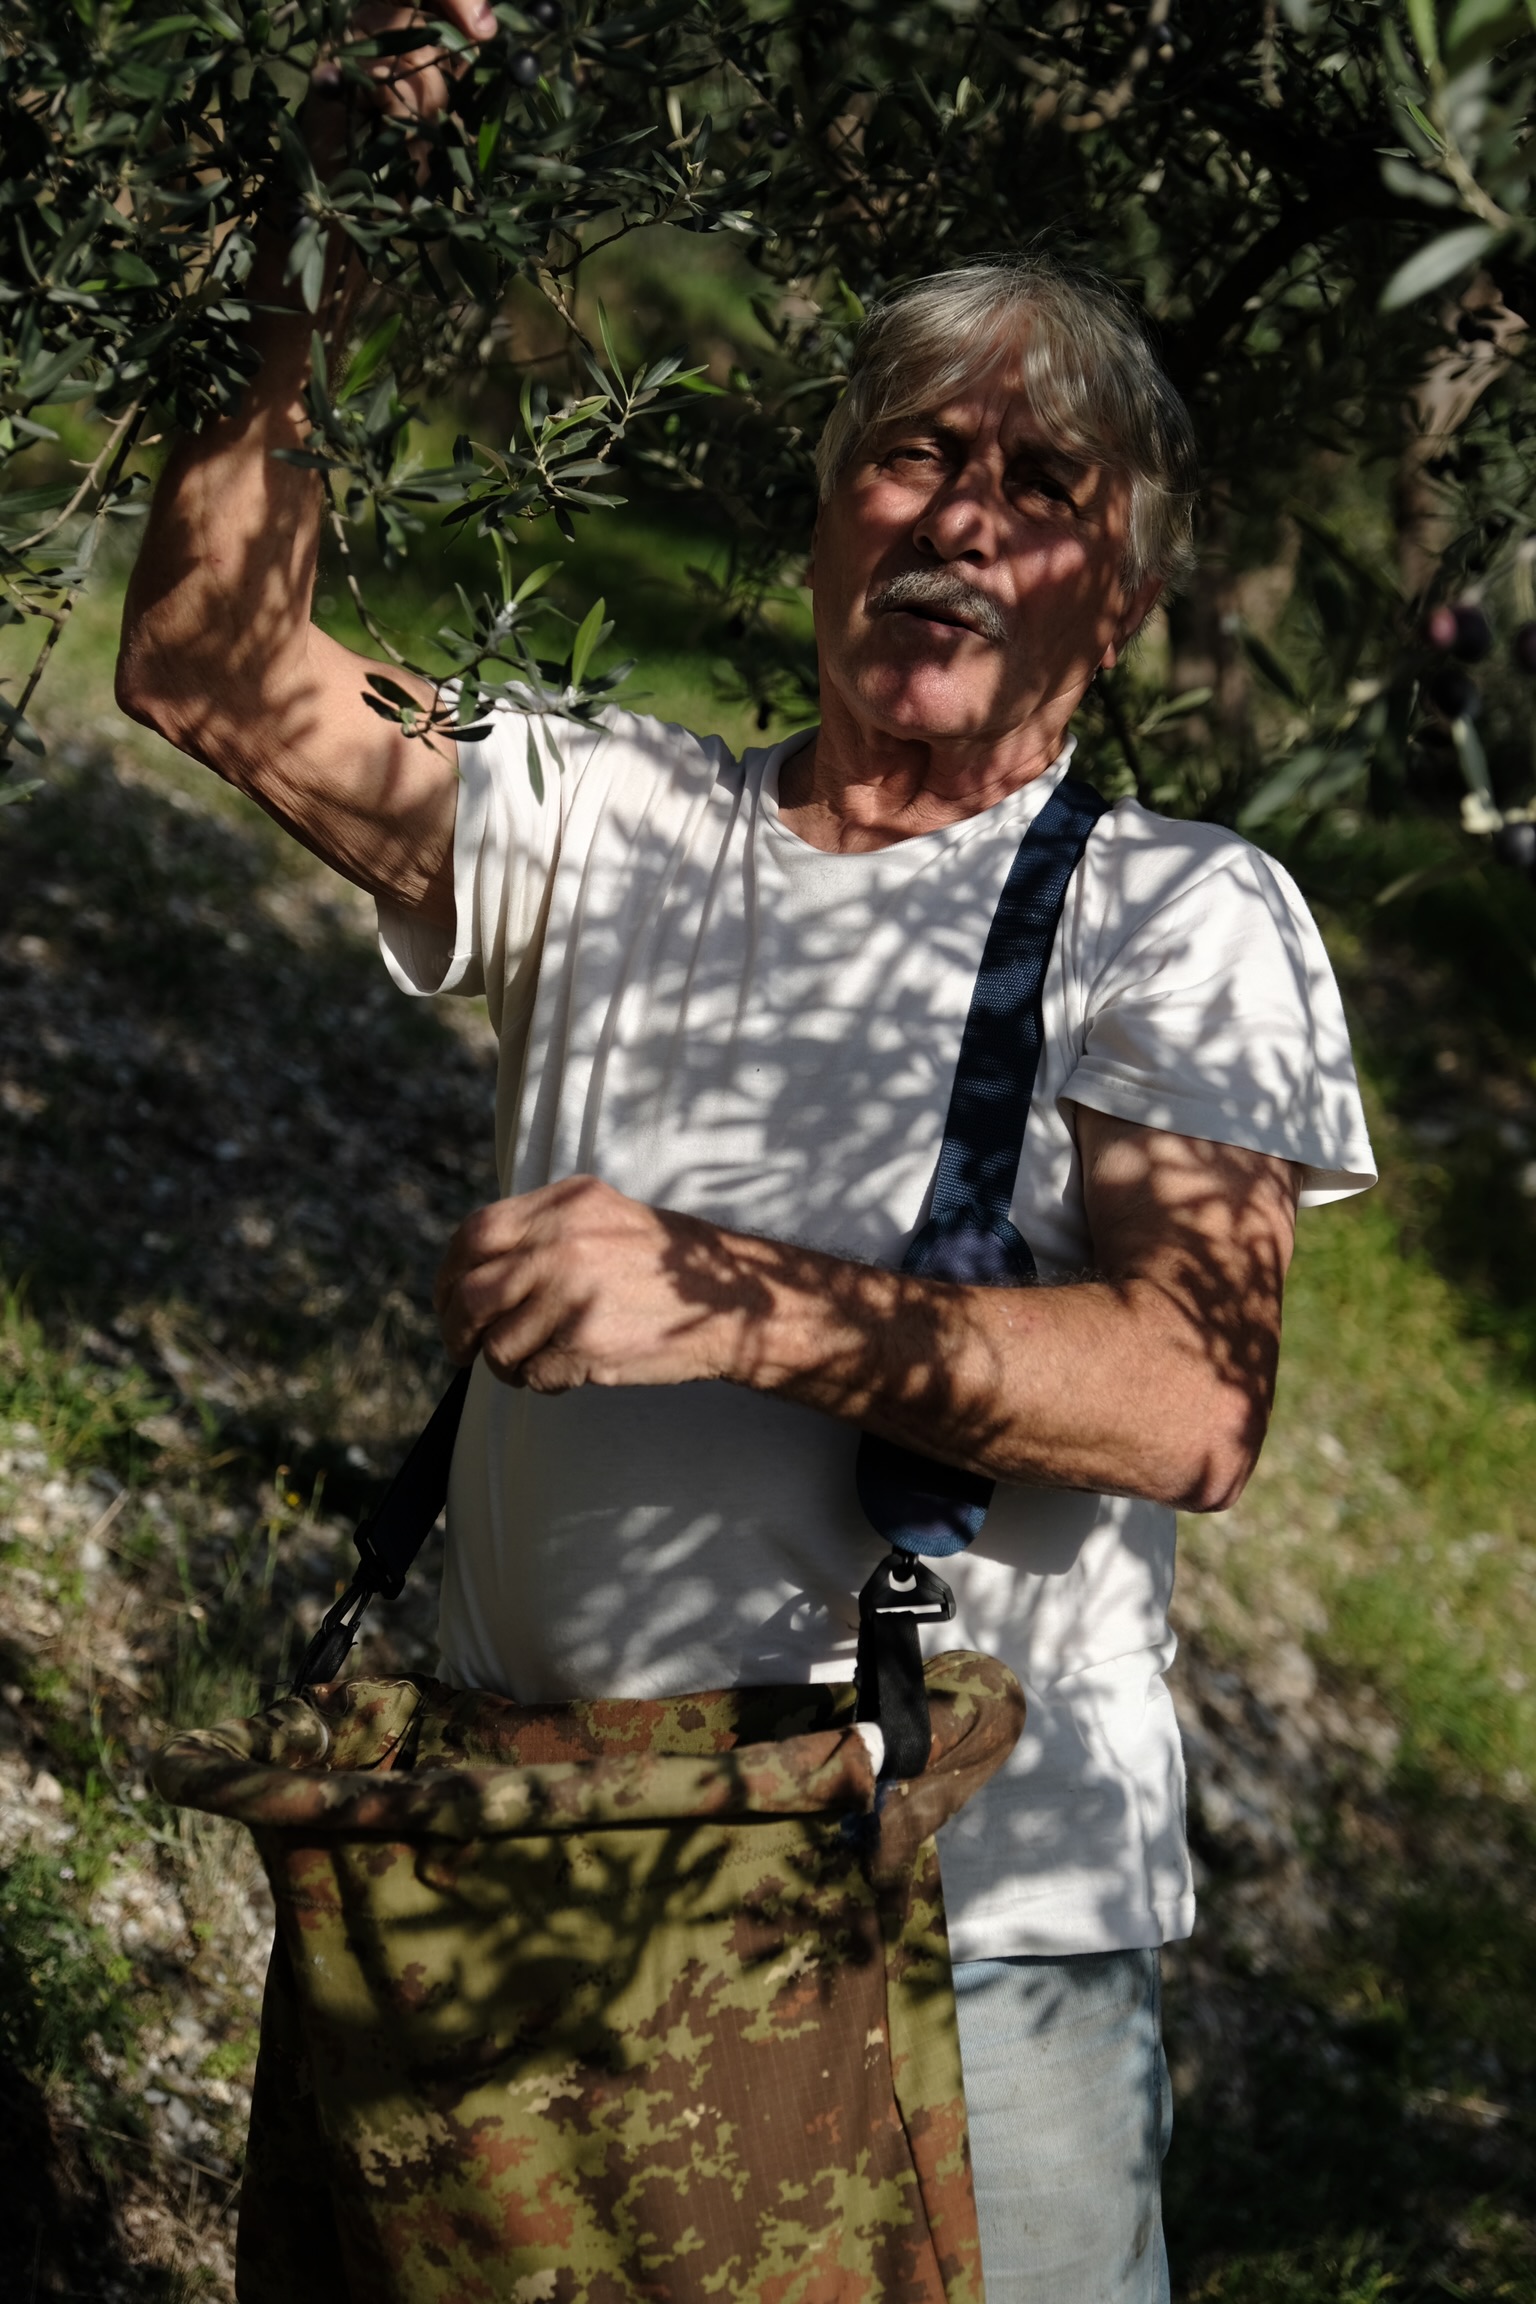 Picking olives...